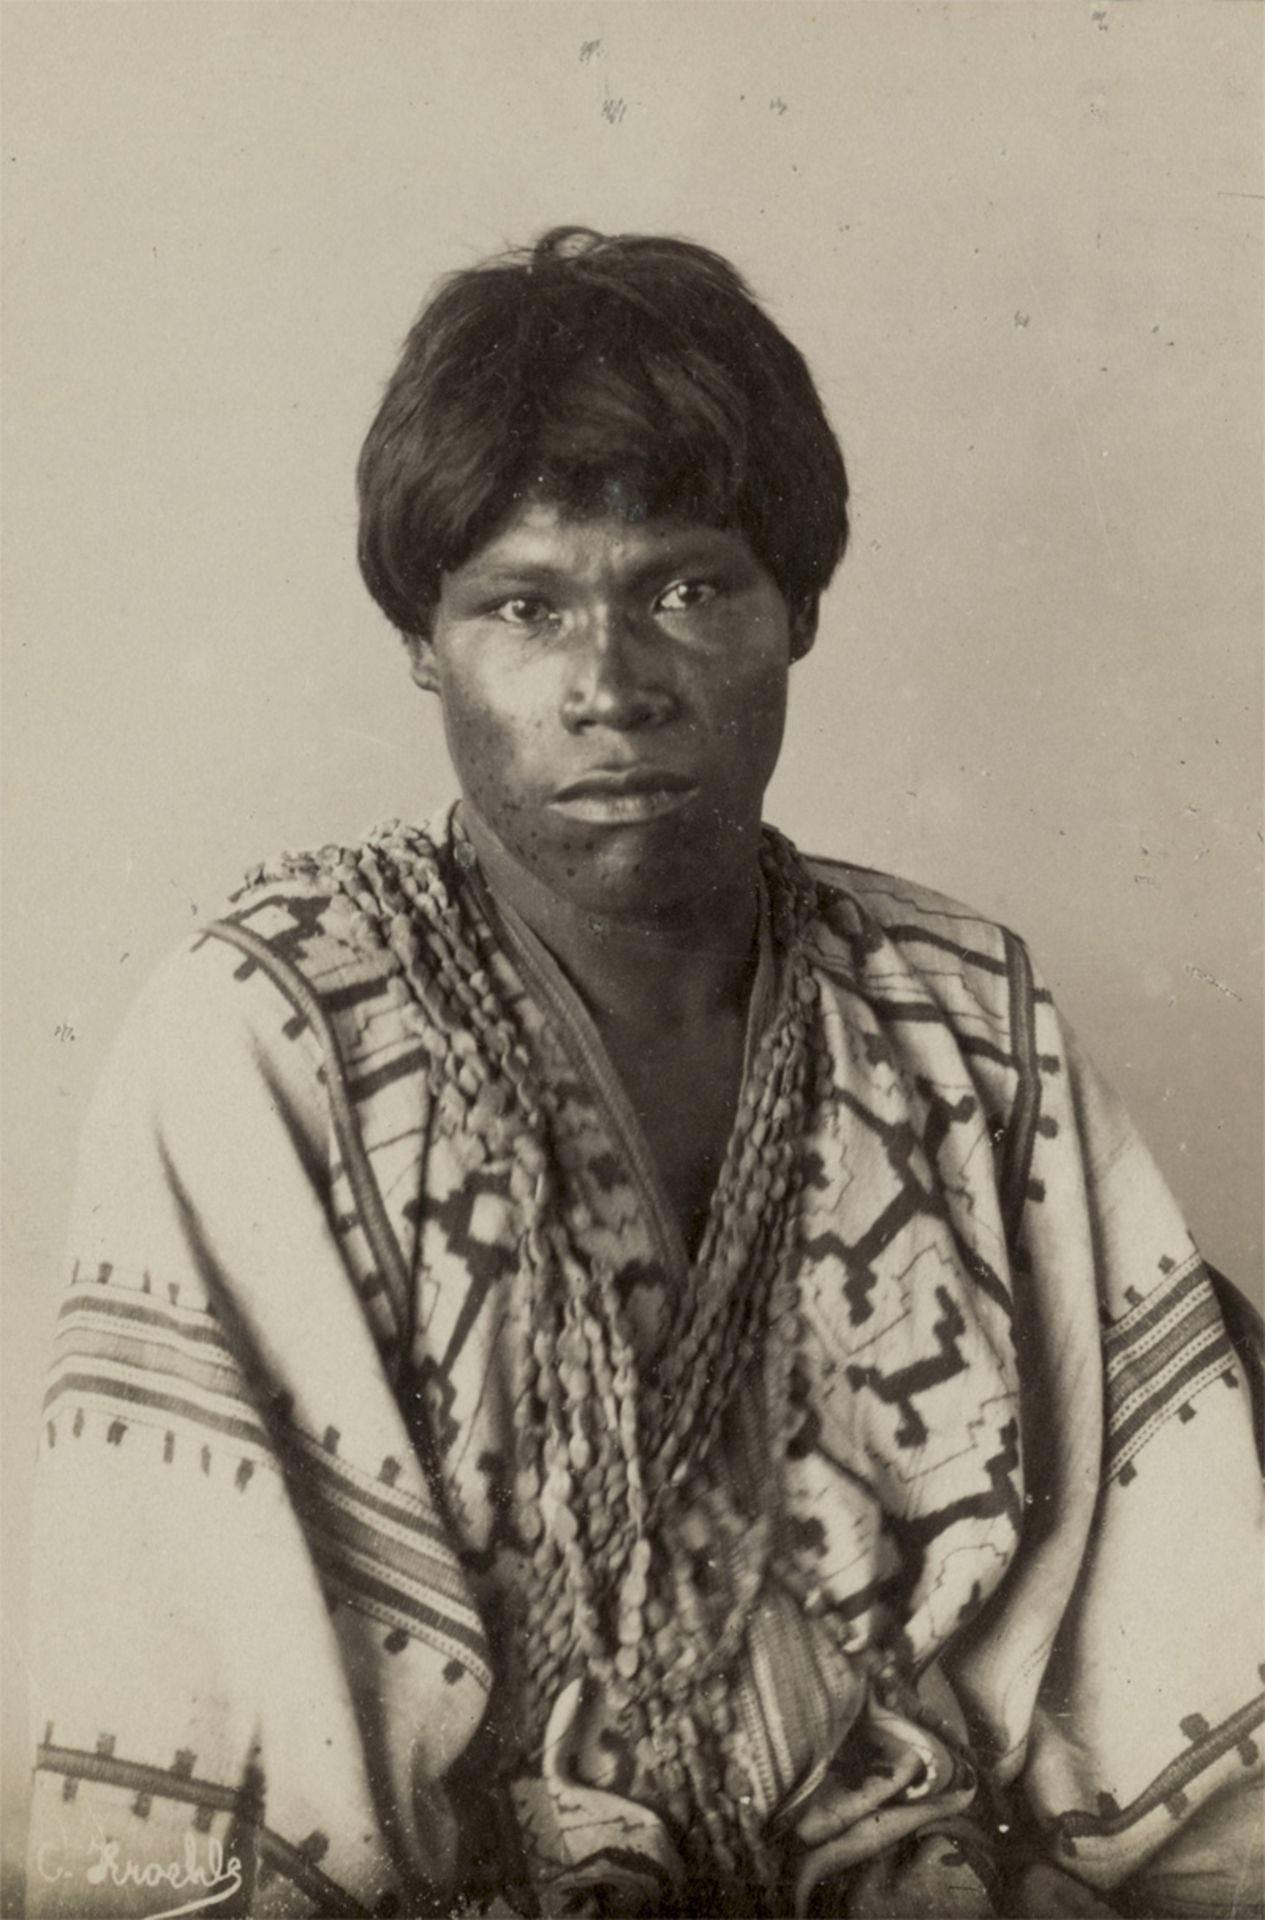 Amazonia: Portraits and ethnographical studies of Peru - Image 7 of 10